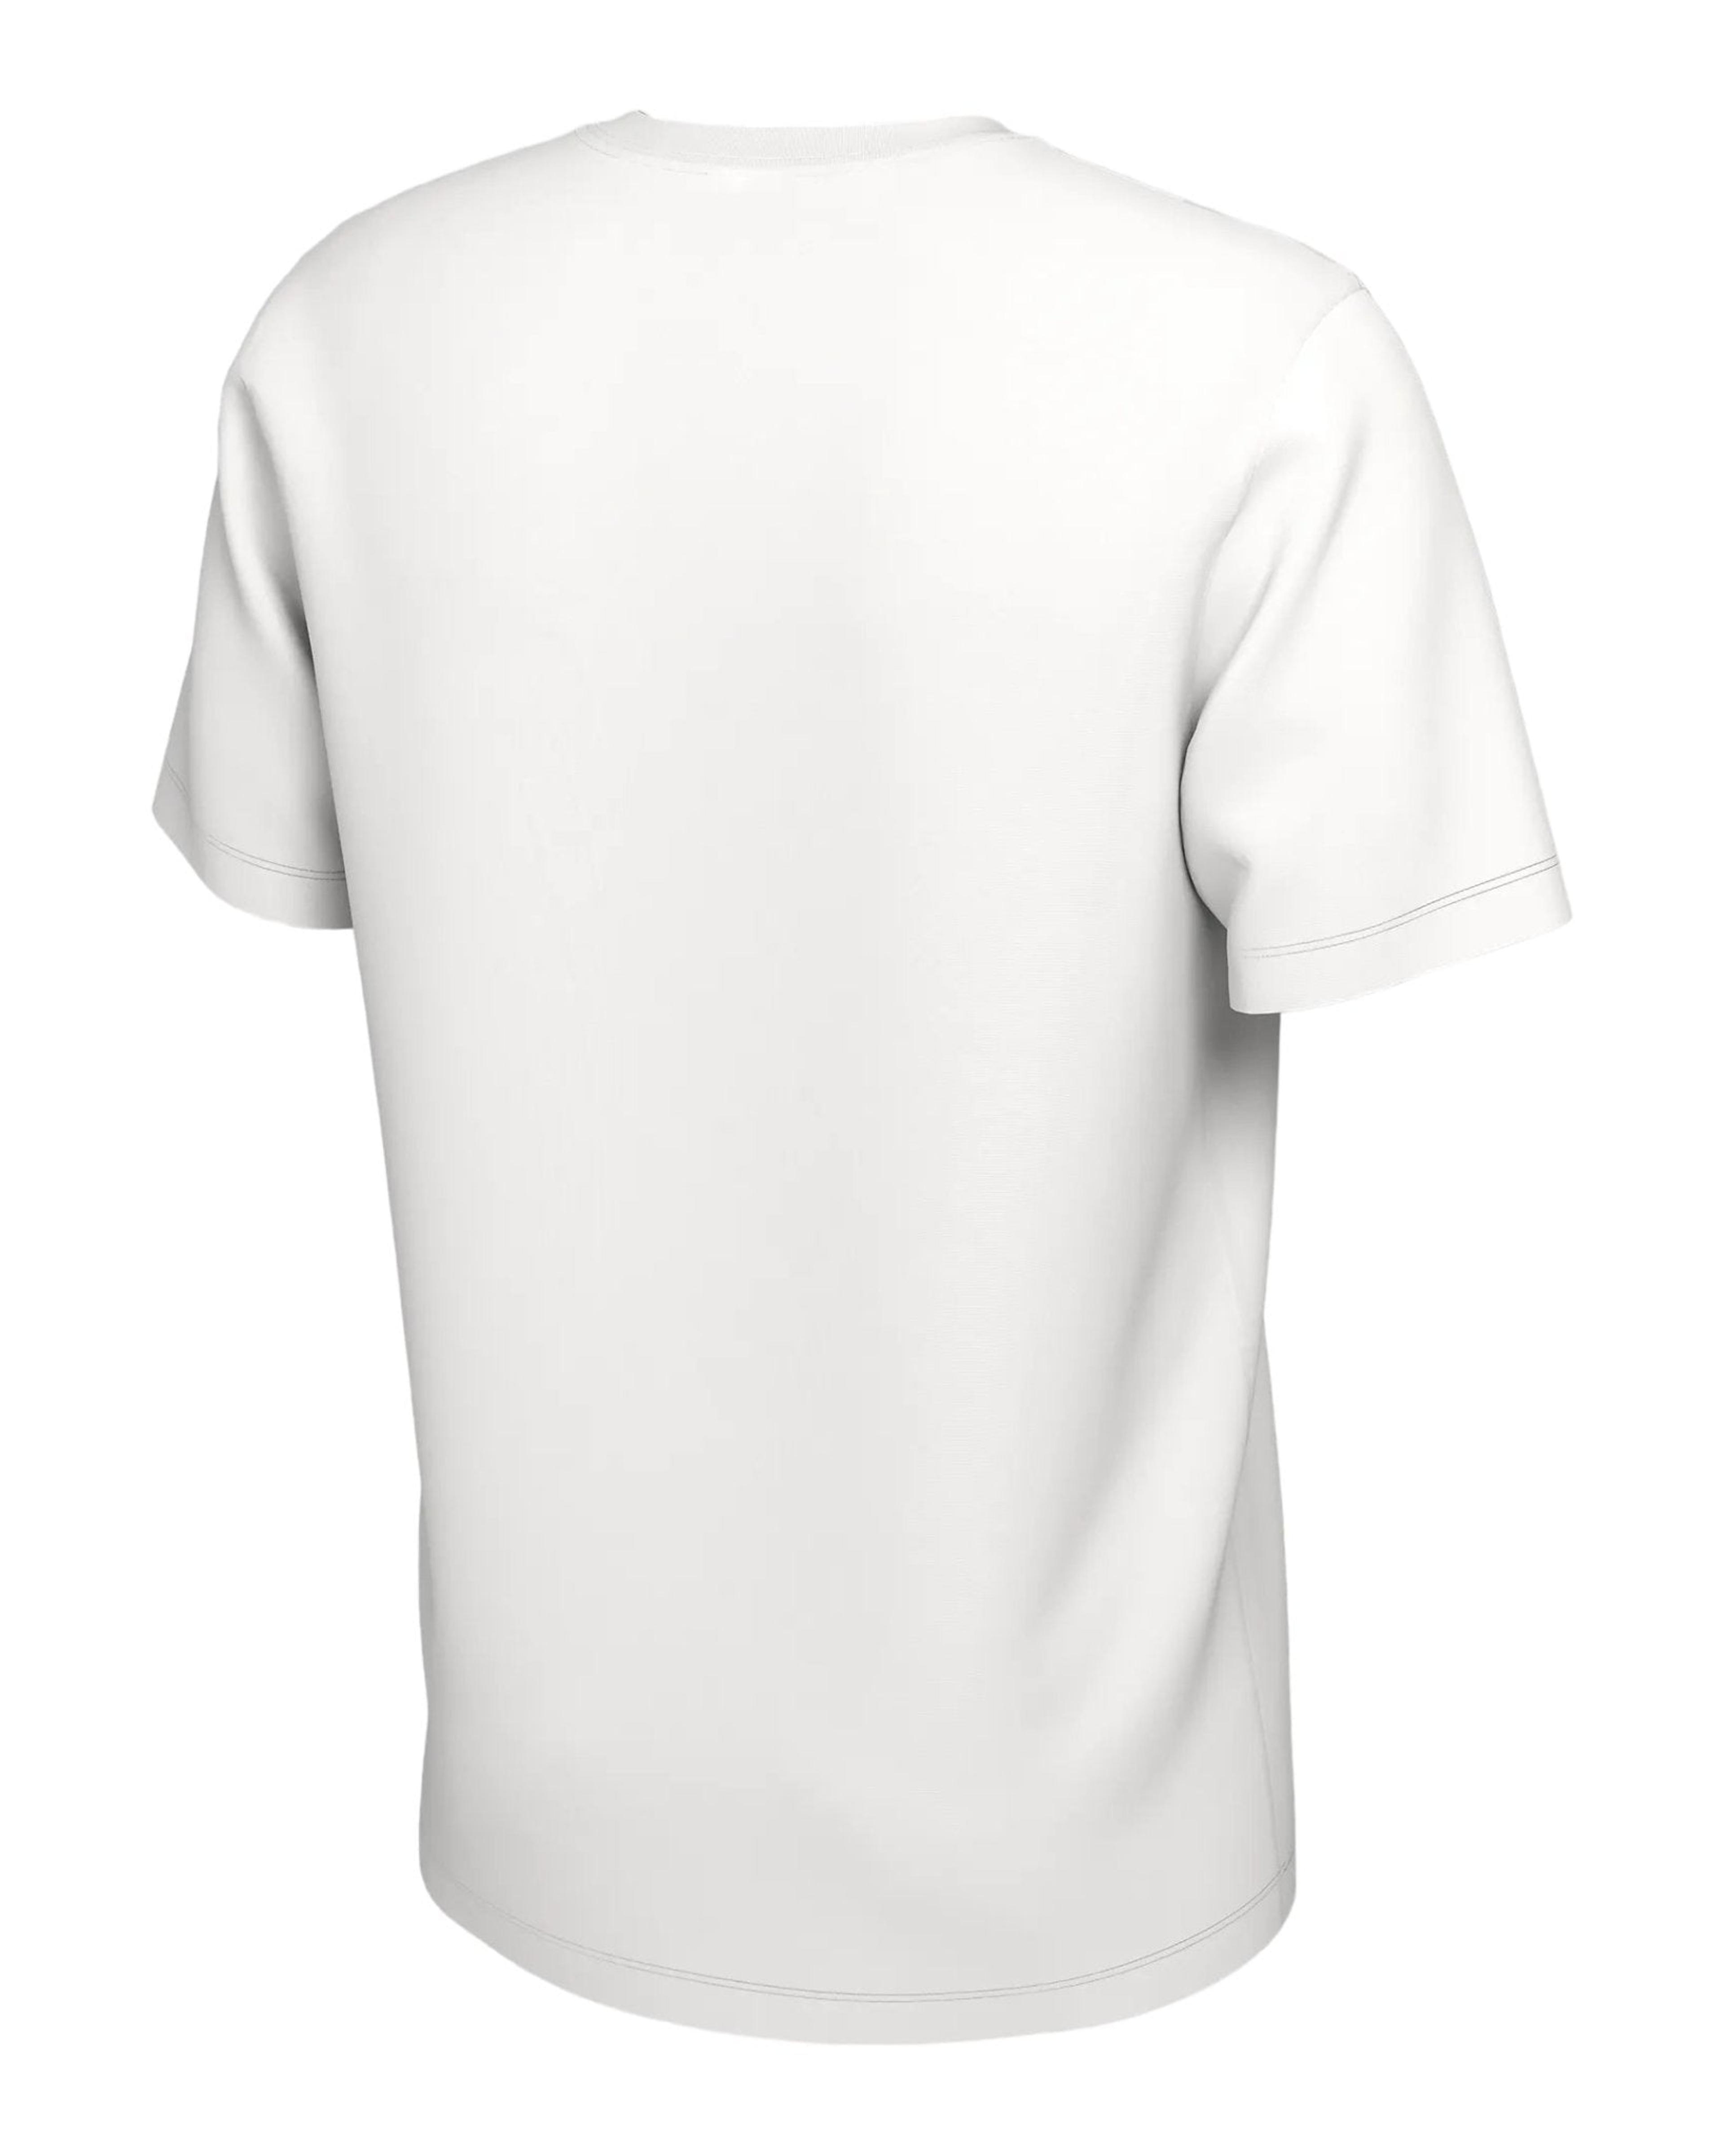 Alternate View 1 of Fortnite x Nike Air Max Airphoria Men's T-Shirt White